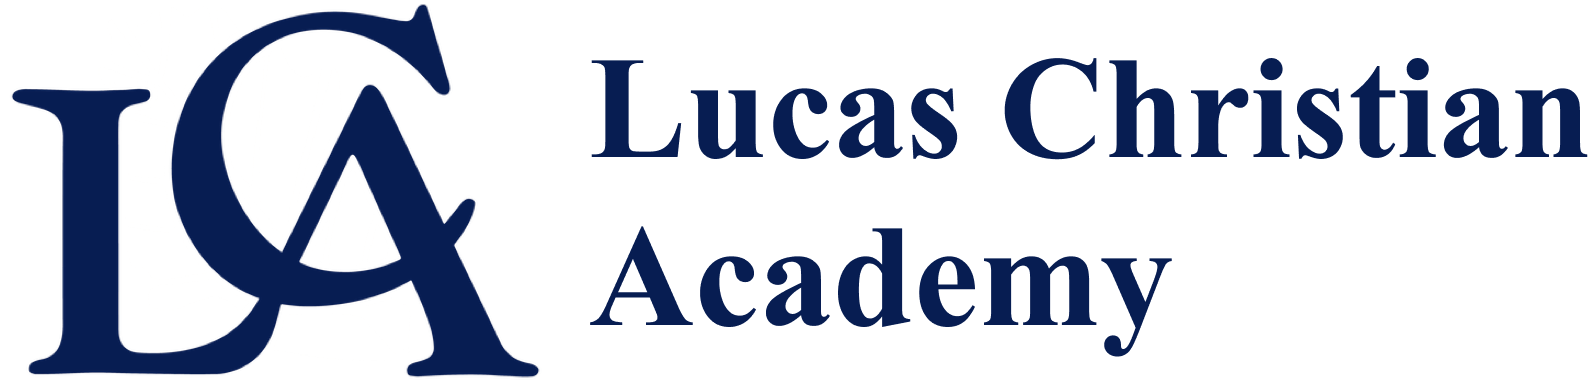 lucas christian academy logo